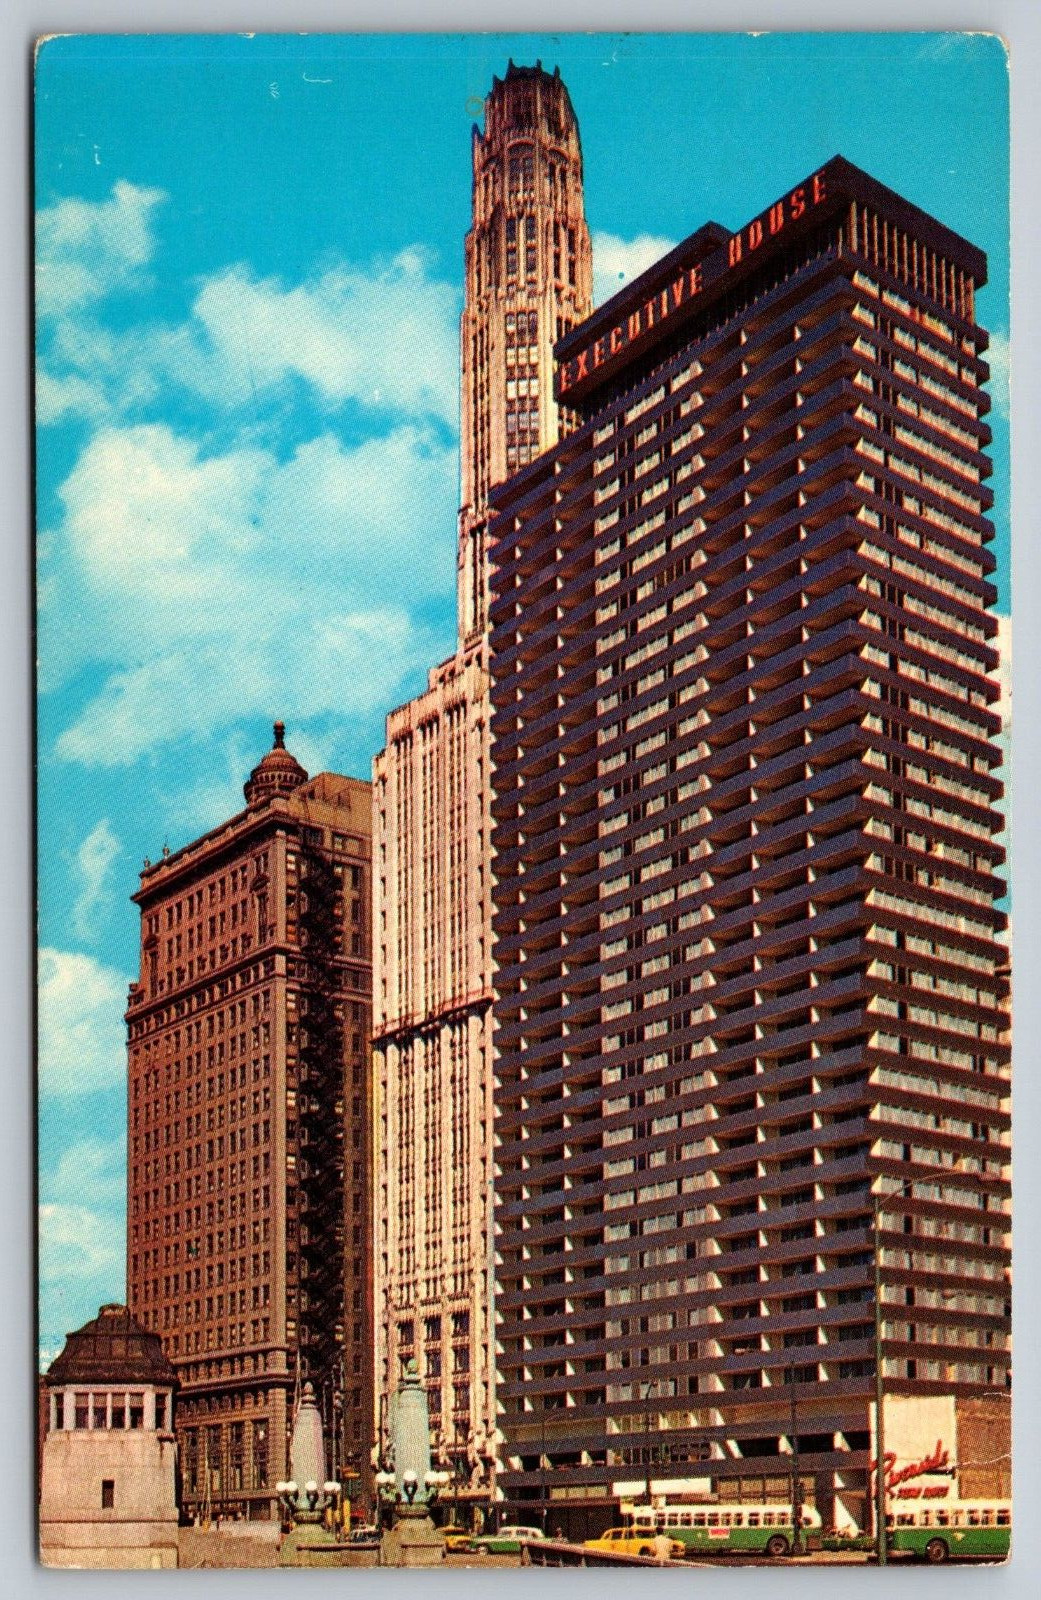 Executive House Hotel, Chicago IL Vintage Postcard